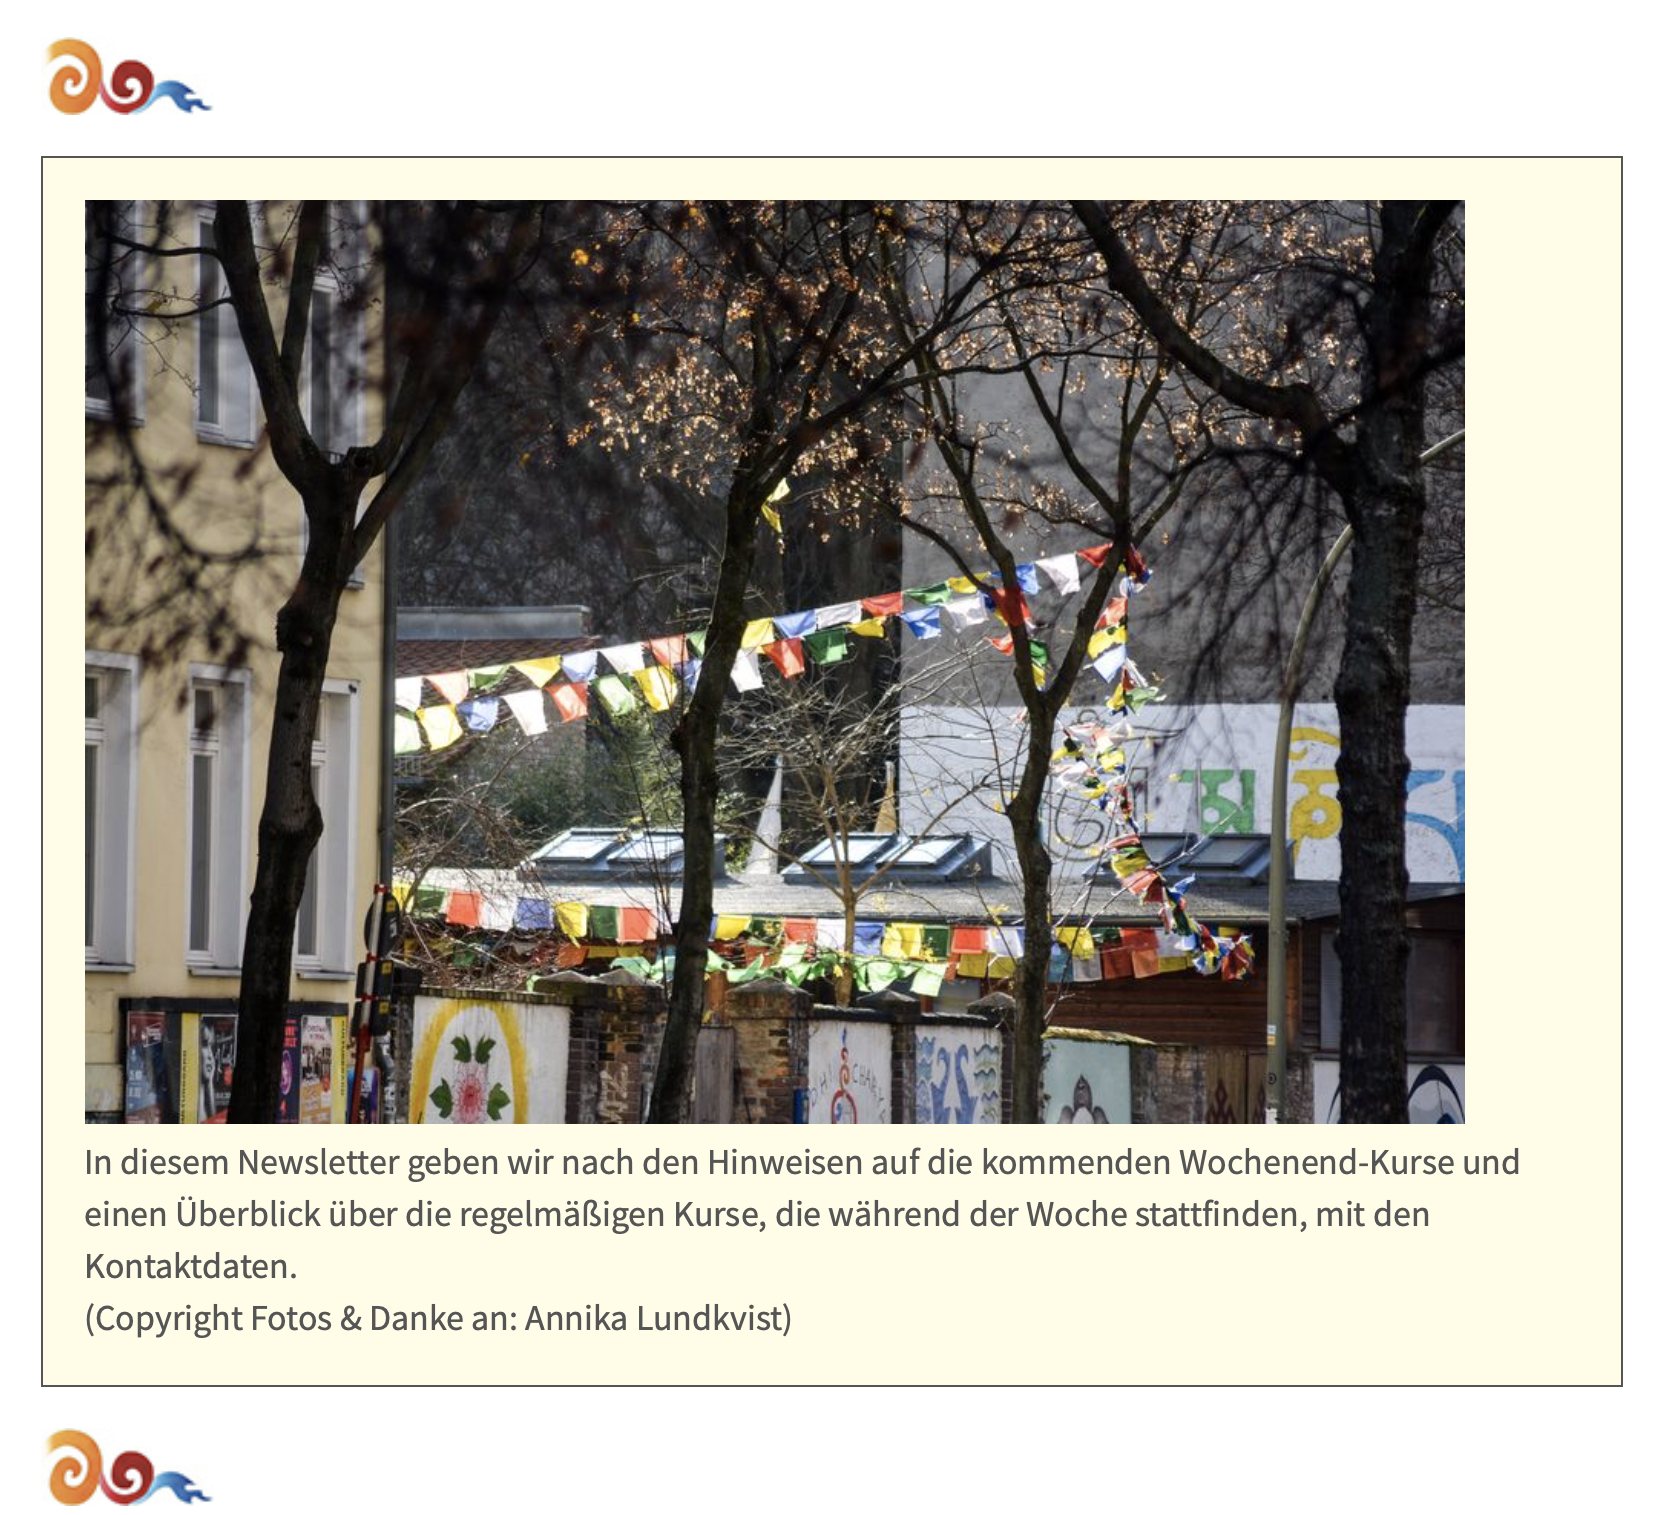 Bodhicharya Berlin Website & January 2020 Newsletter